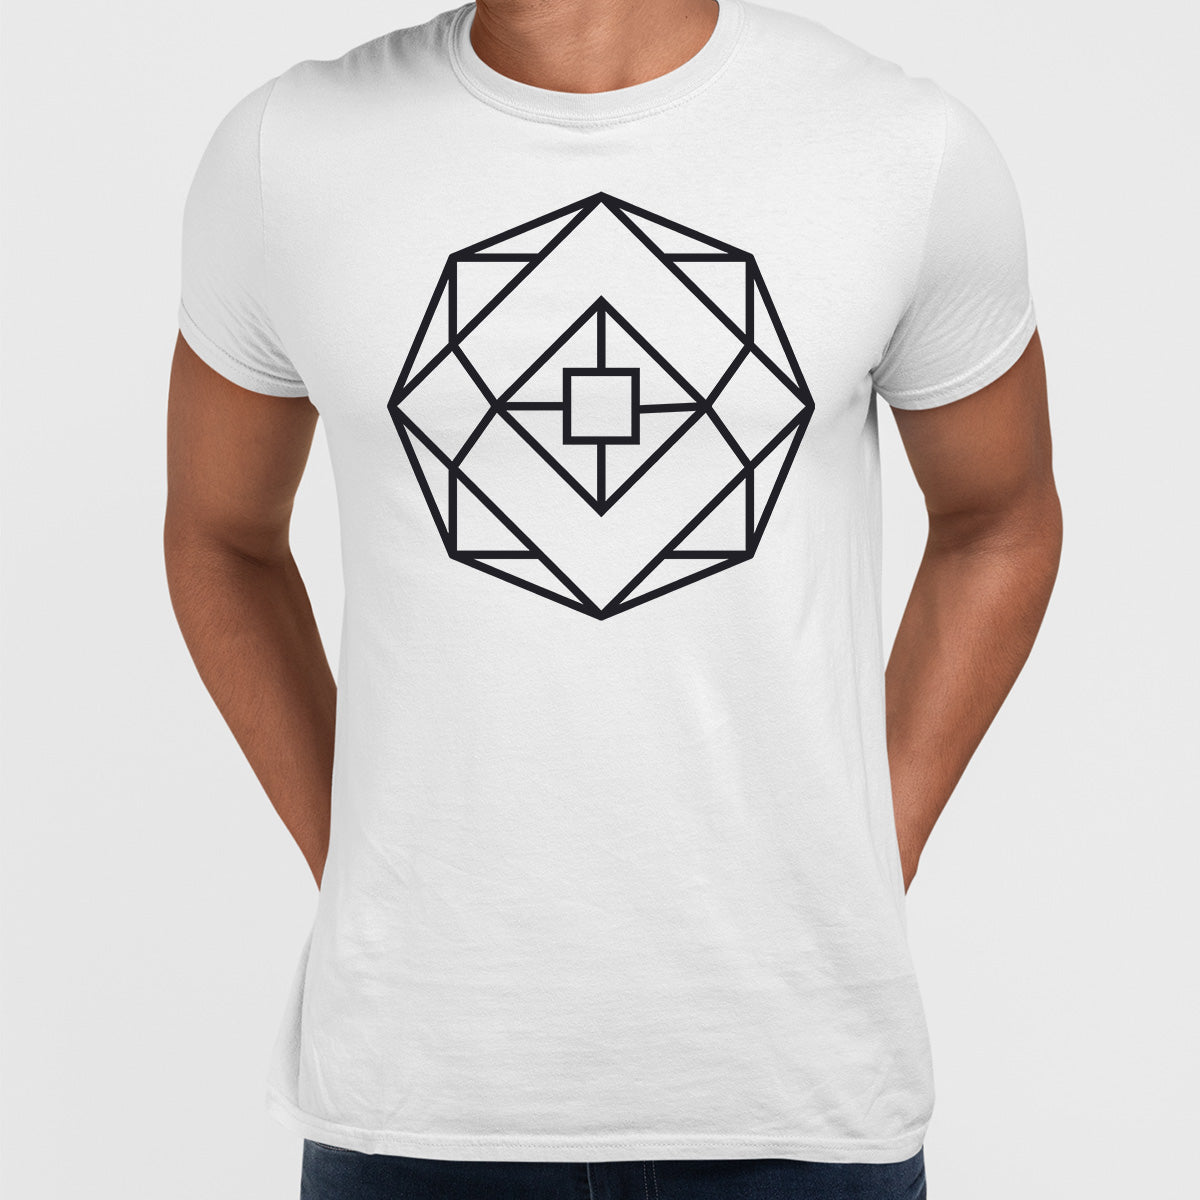 Modern Geometric Elements - Line Dots & Shapes Printed t-shirts Unisex Sample 21 - Kuzi Tees